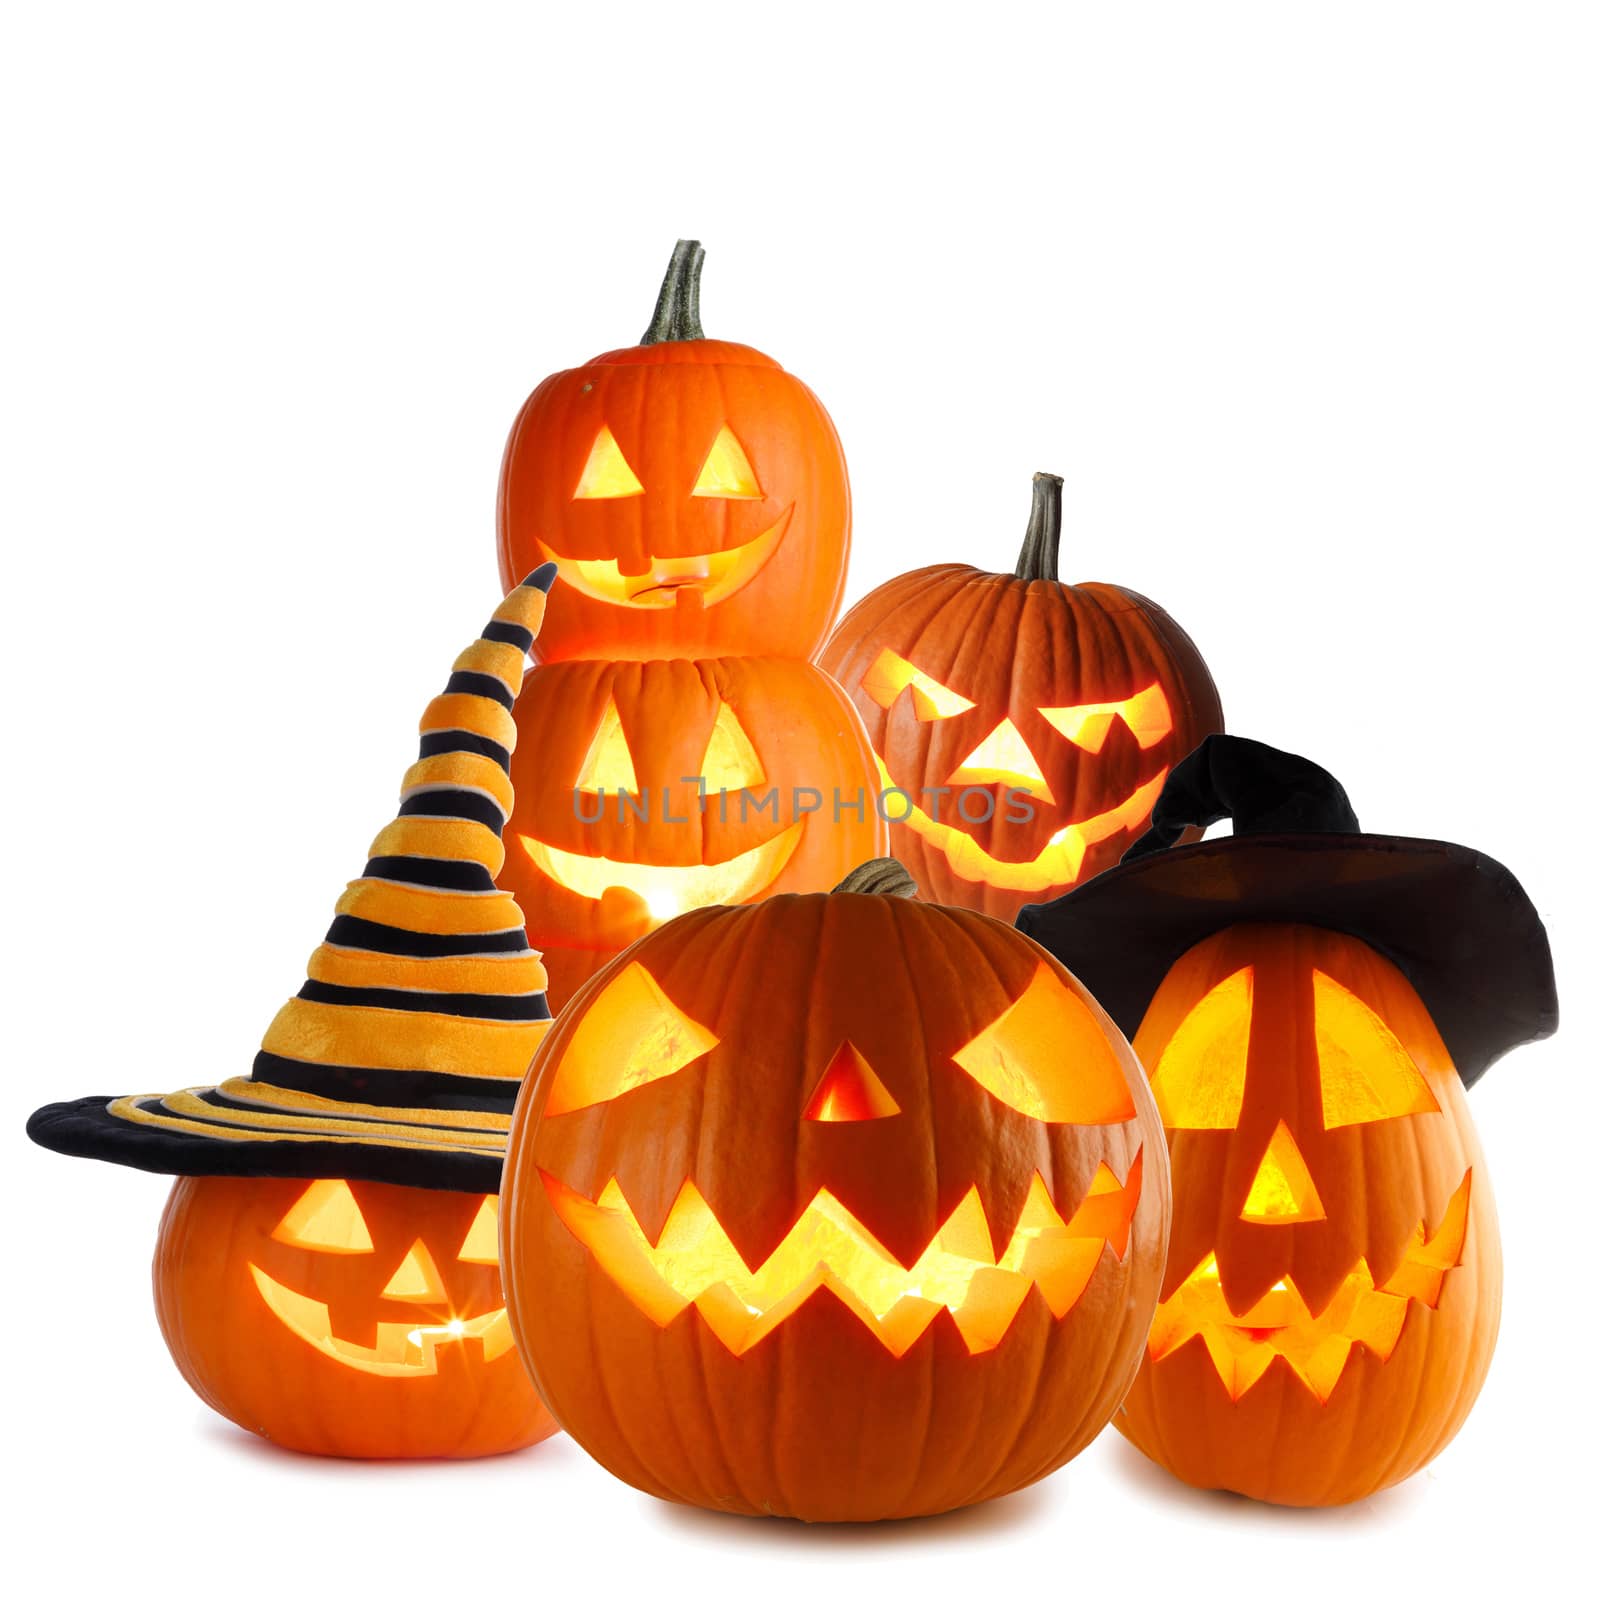 Jack O Lantern Halloween pumpkins by Yellowj